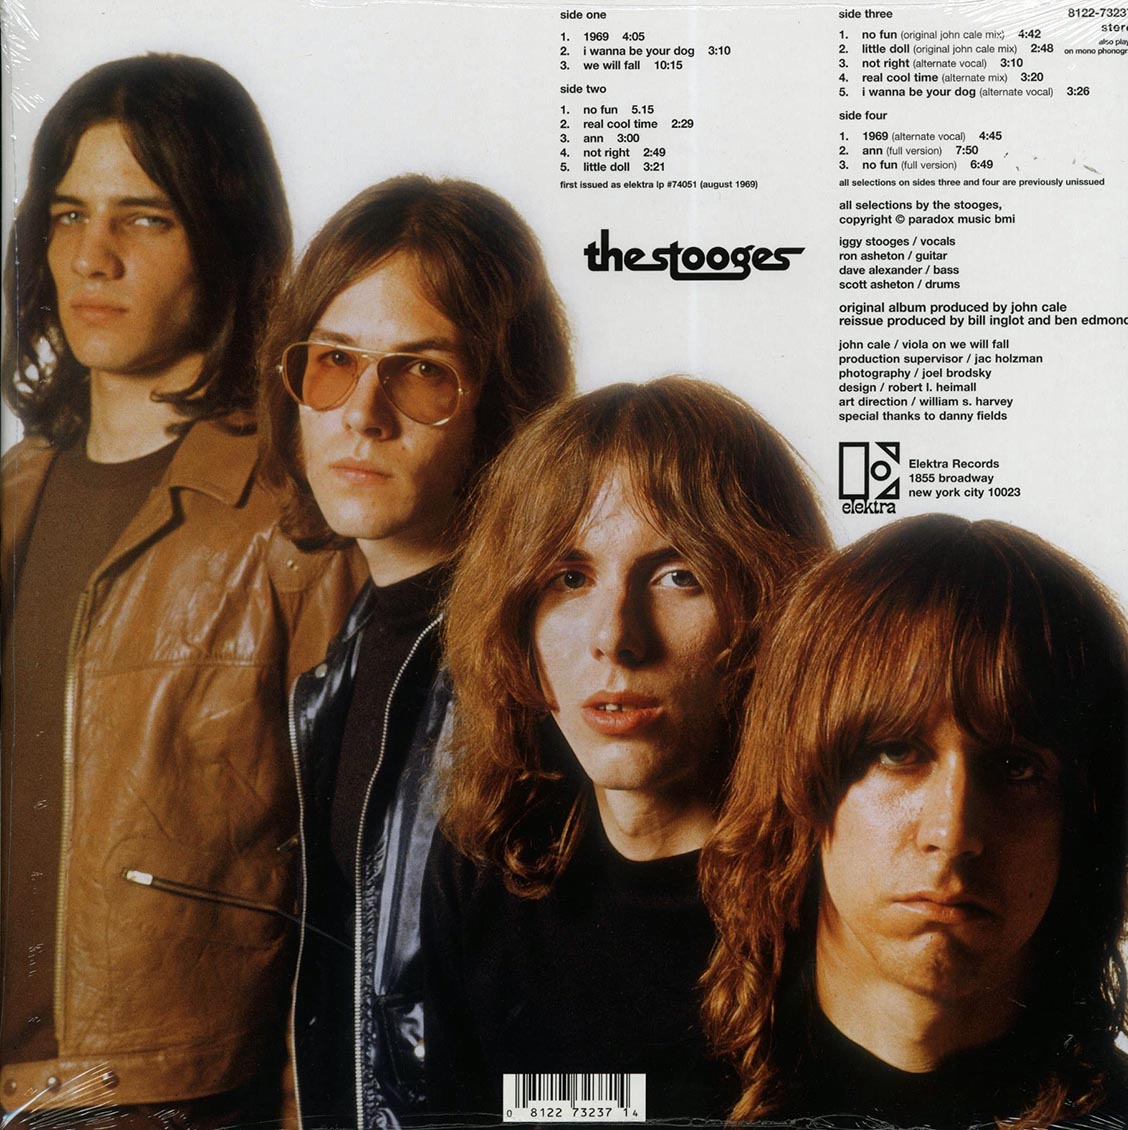 The Stooges - The Stooges (+ 9 bonus tracks) (2xLP) (remastered) (expanded edition) - Vinyl LP, LP